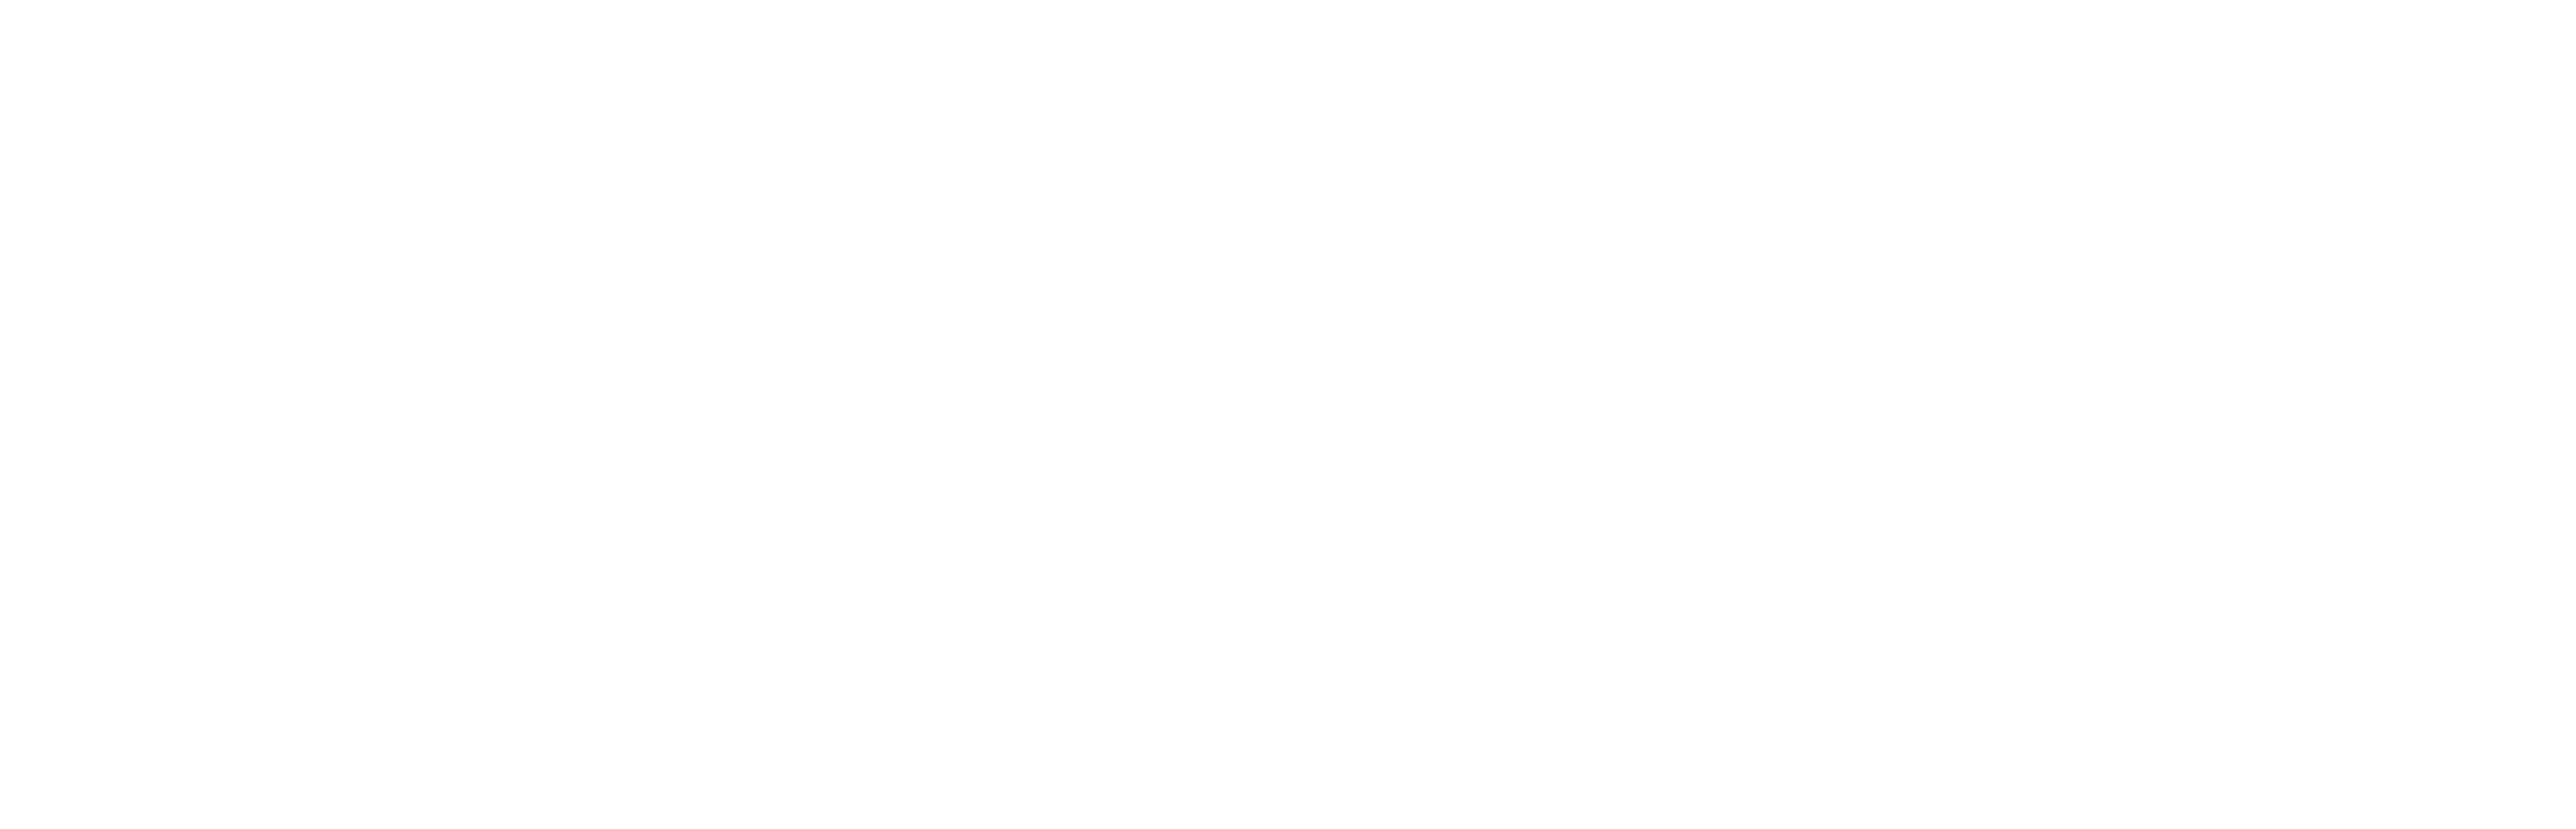 Loftland Creative Logo